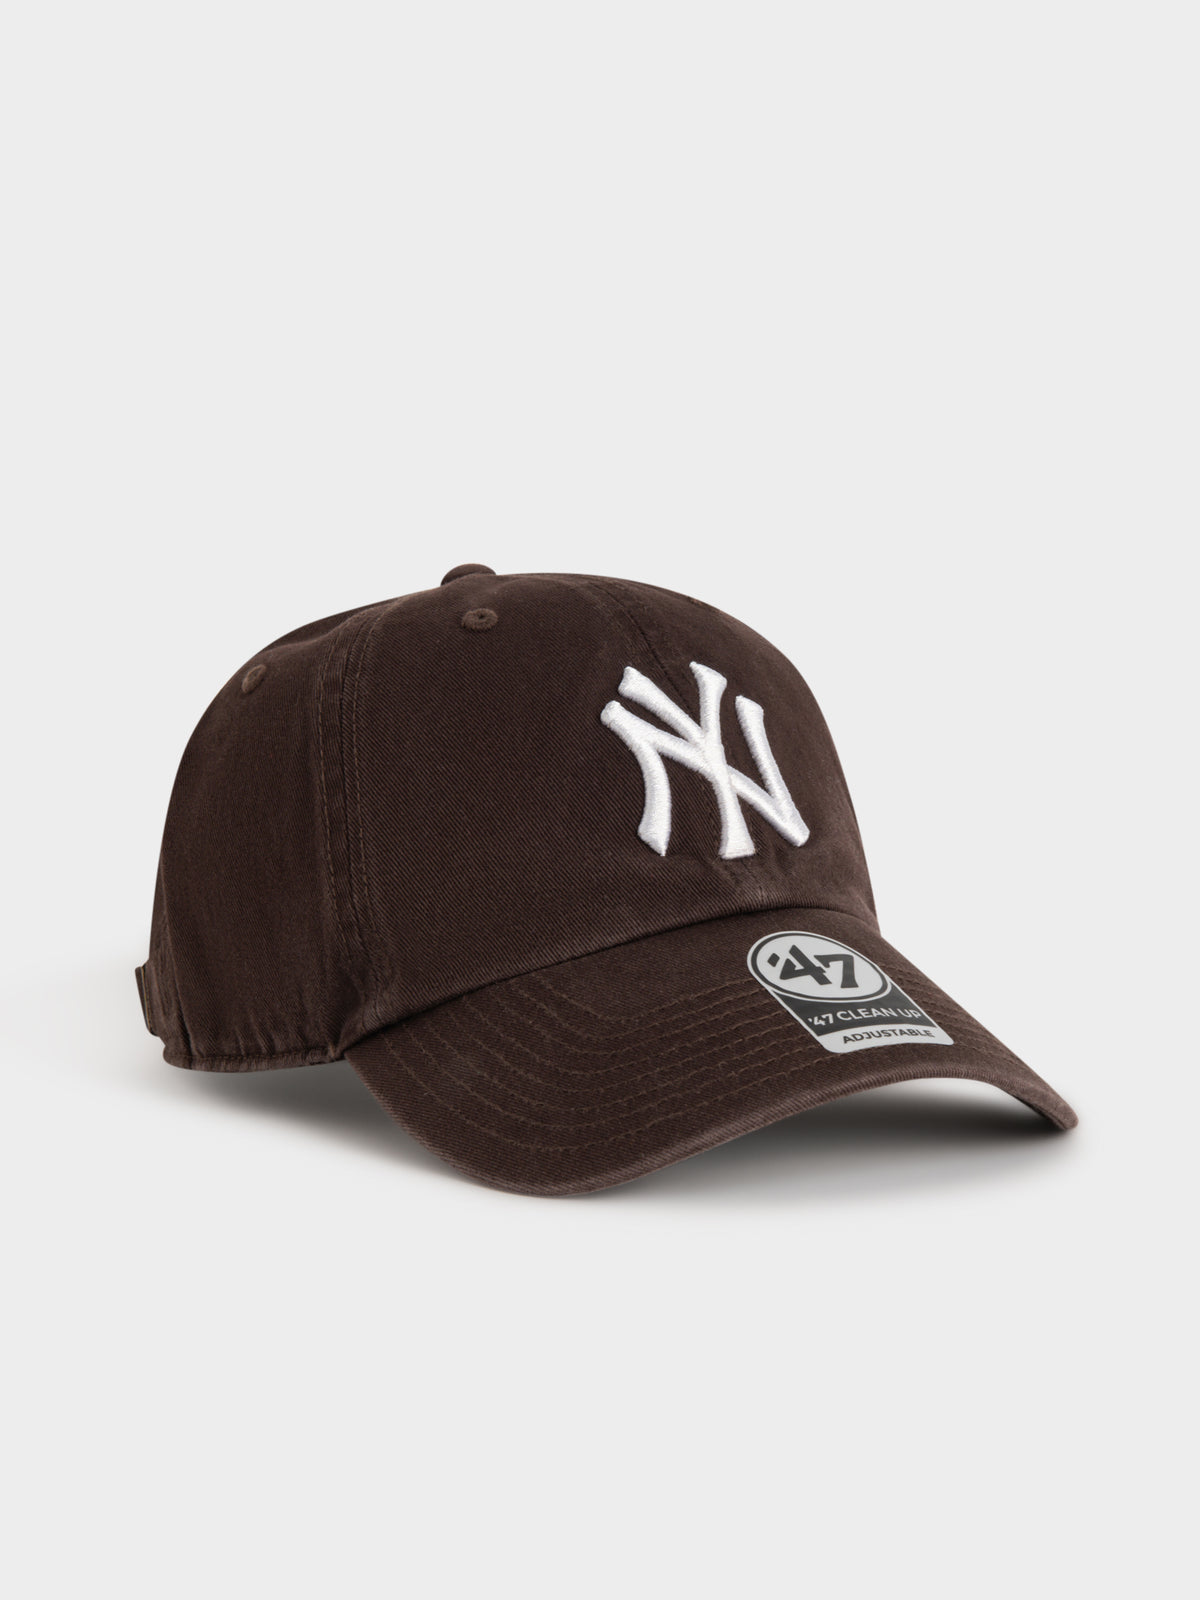 NY Yankees 47 Clean Up Cap in Brown